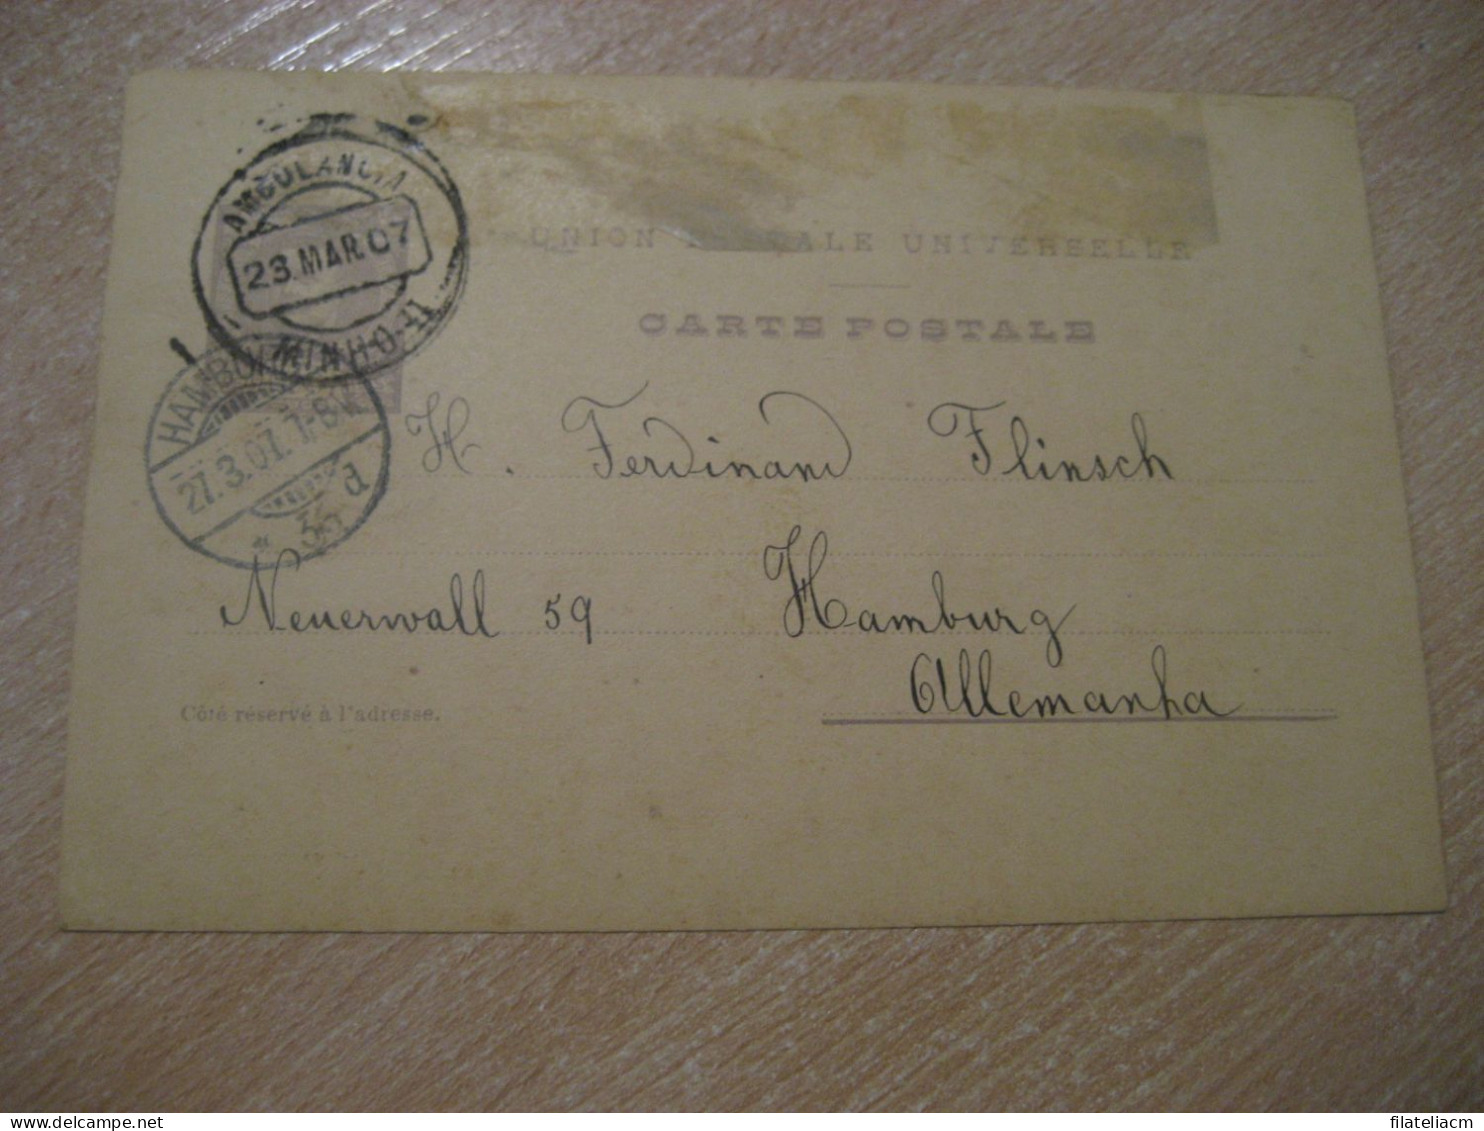 AMBULANCIA MINHO II Braga Porto 1907 To Hamburg Germany Cancel UPU Faults Carte Postale Postal Stationery Card PORTUGAL - Brieven En Documenten